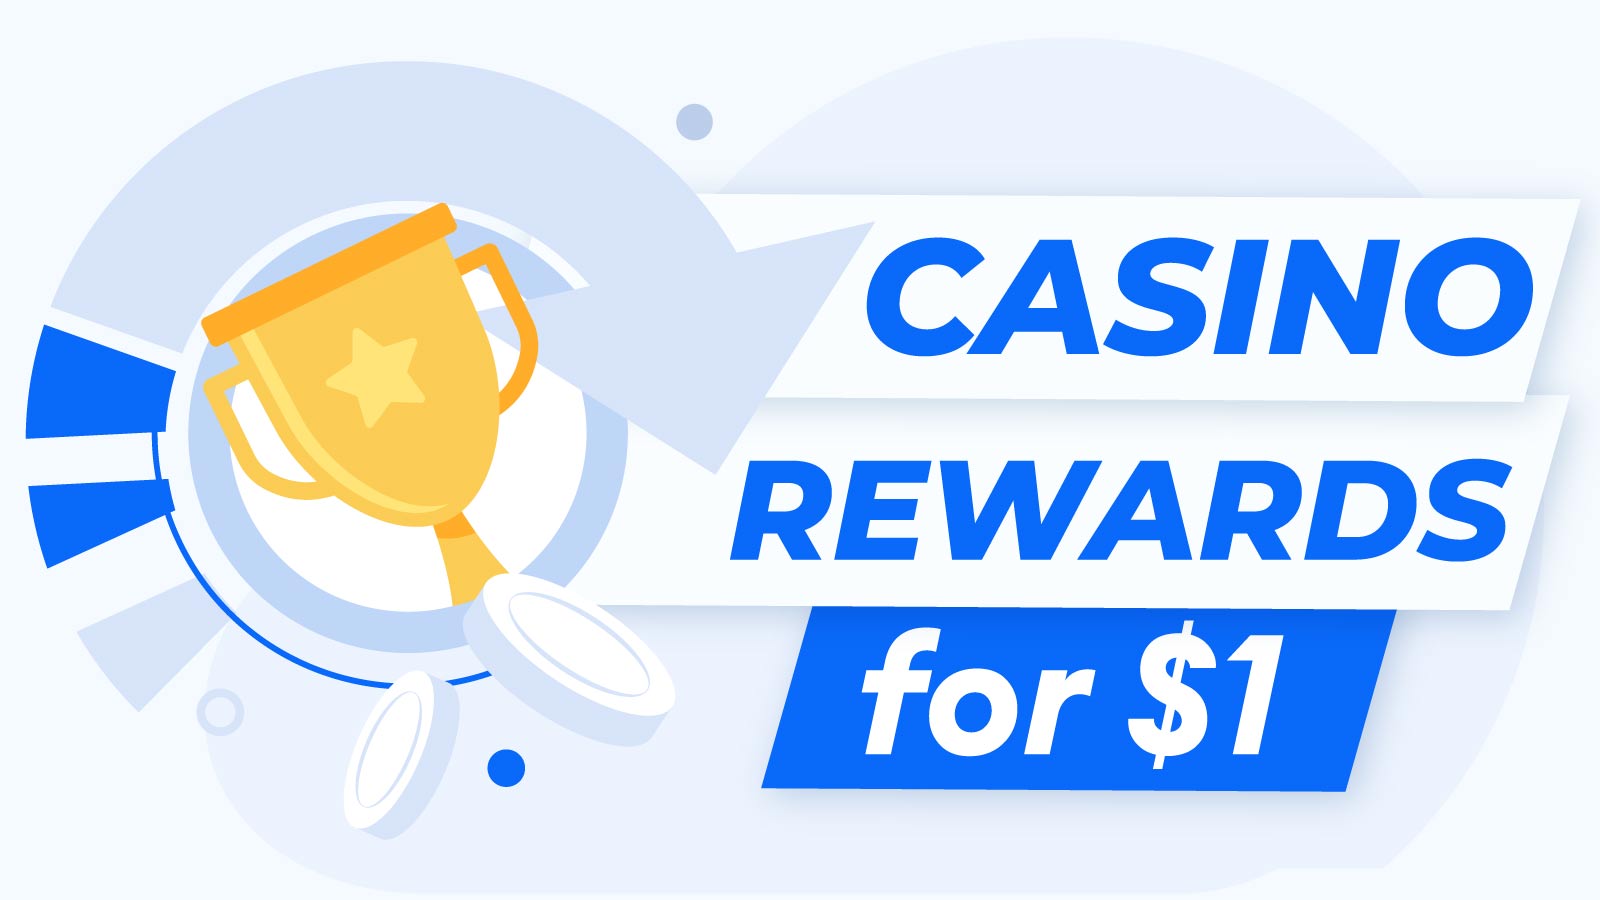 Full Casino Rewards List & Free Spins Bonuses for $1